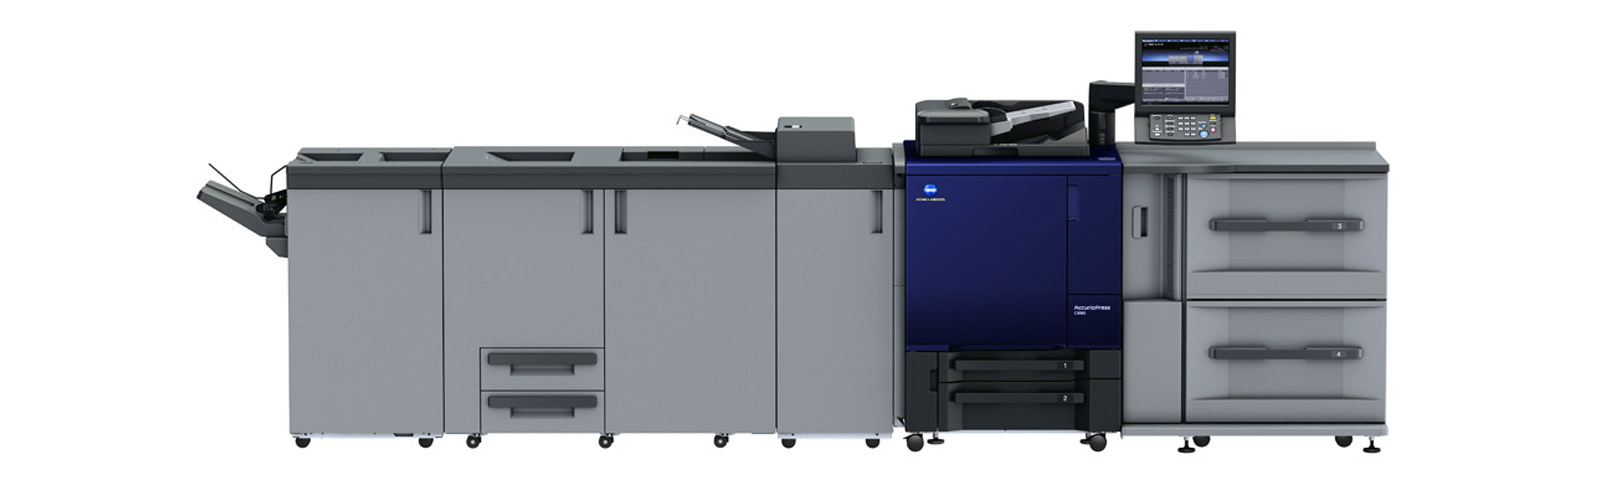 Konica Minolta AccurioPress C3070 Production Print System